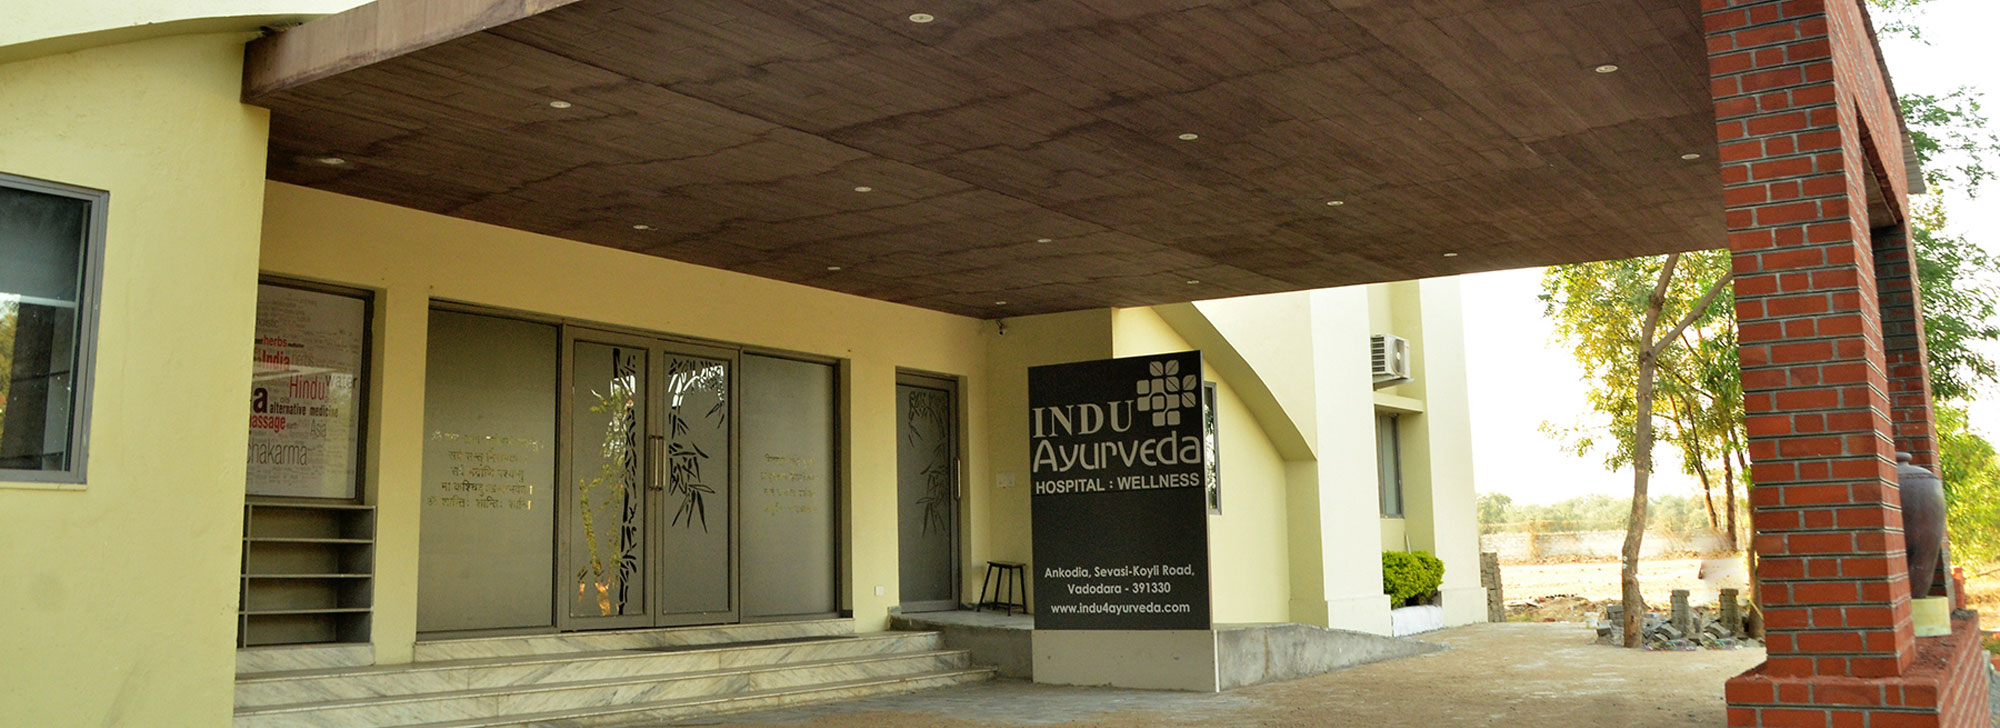 Indu Ayurveda Hospital